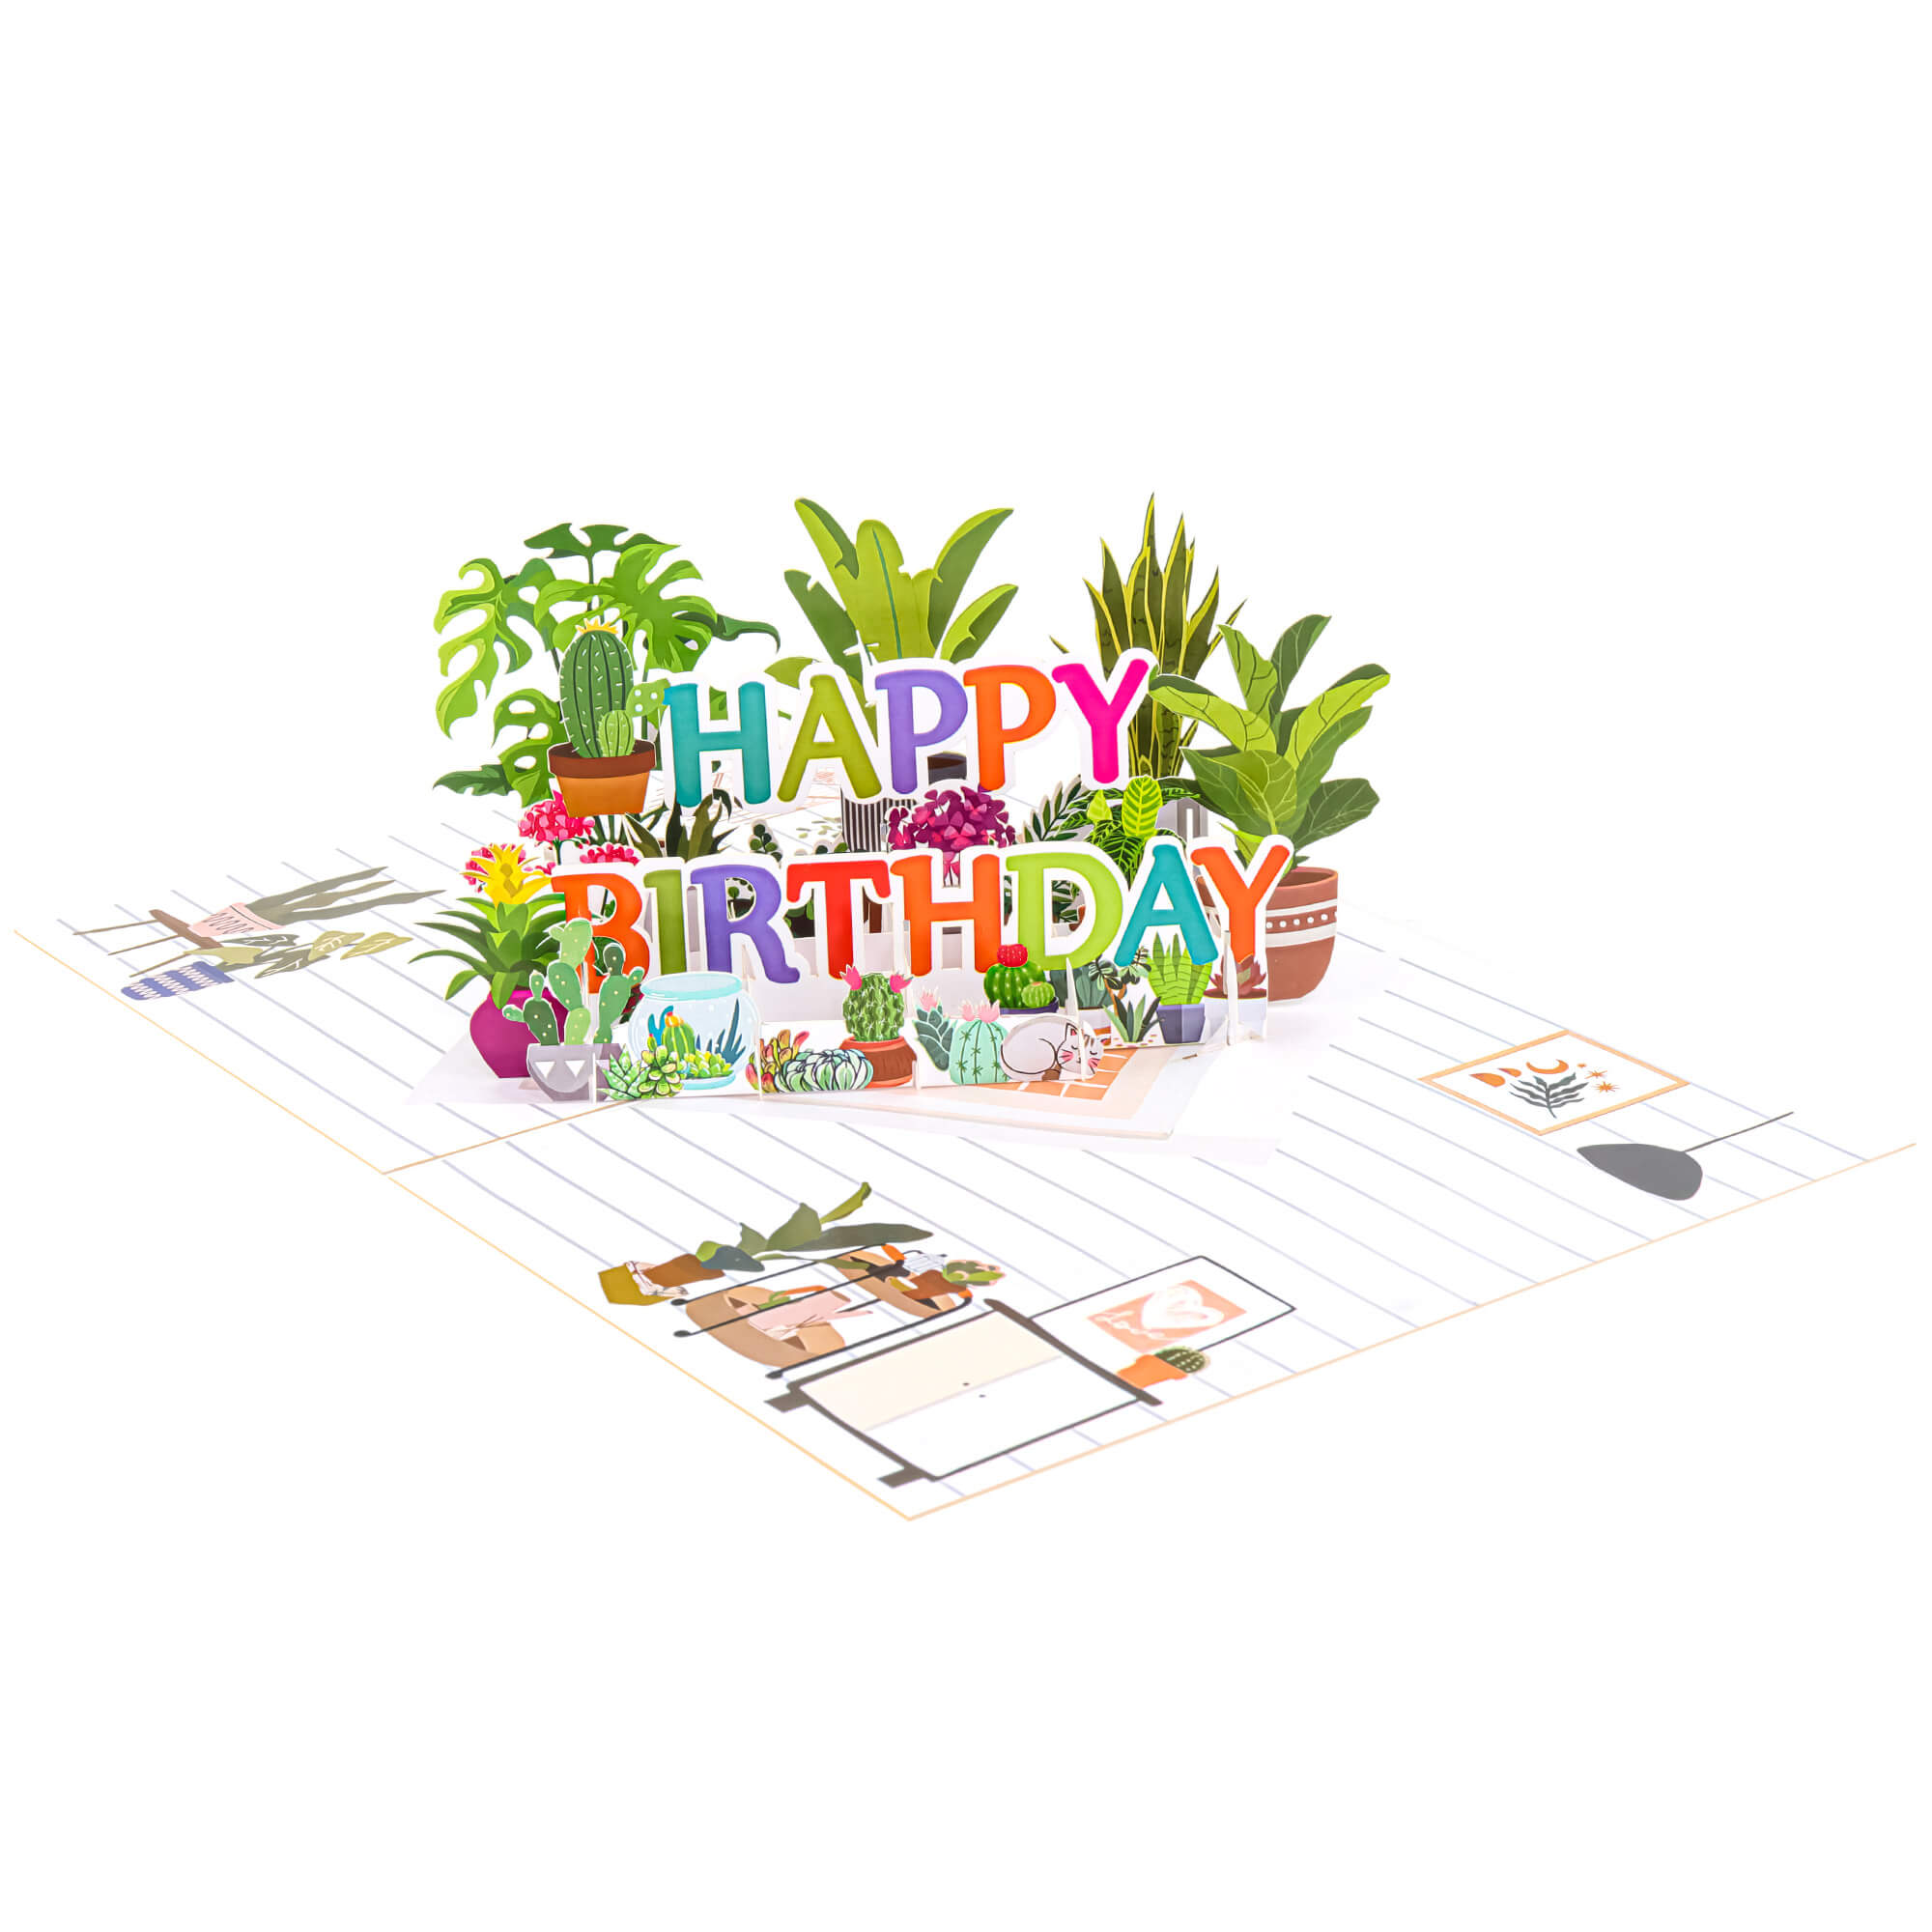 https://charmpopcards.com/wp-content/uploads/2022/05/Happy-Birthday-Plants-Pop-Up-Card-overview-wholesale-manufacture-custom-design-custom-custom-pop-up-birthday-card-just-because-pop-up-card-summer-pop-up-card-2.jpg